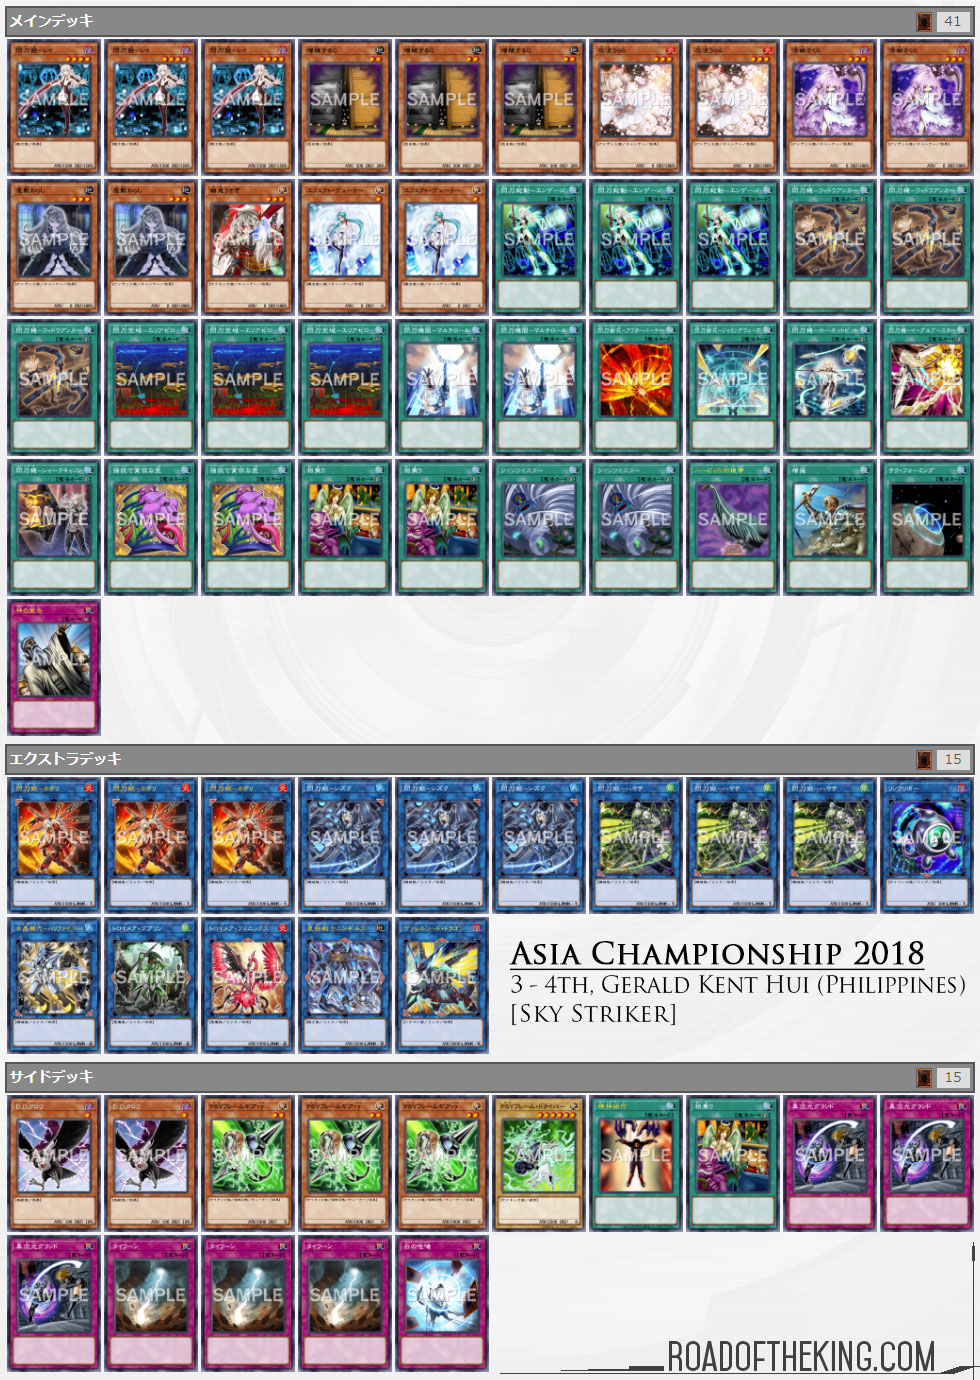 Asia Championship 2018: Duelist Profile (Ranking)